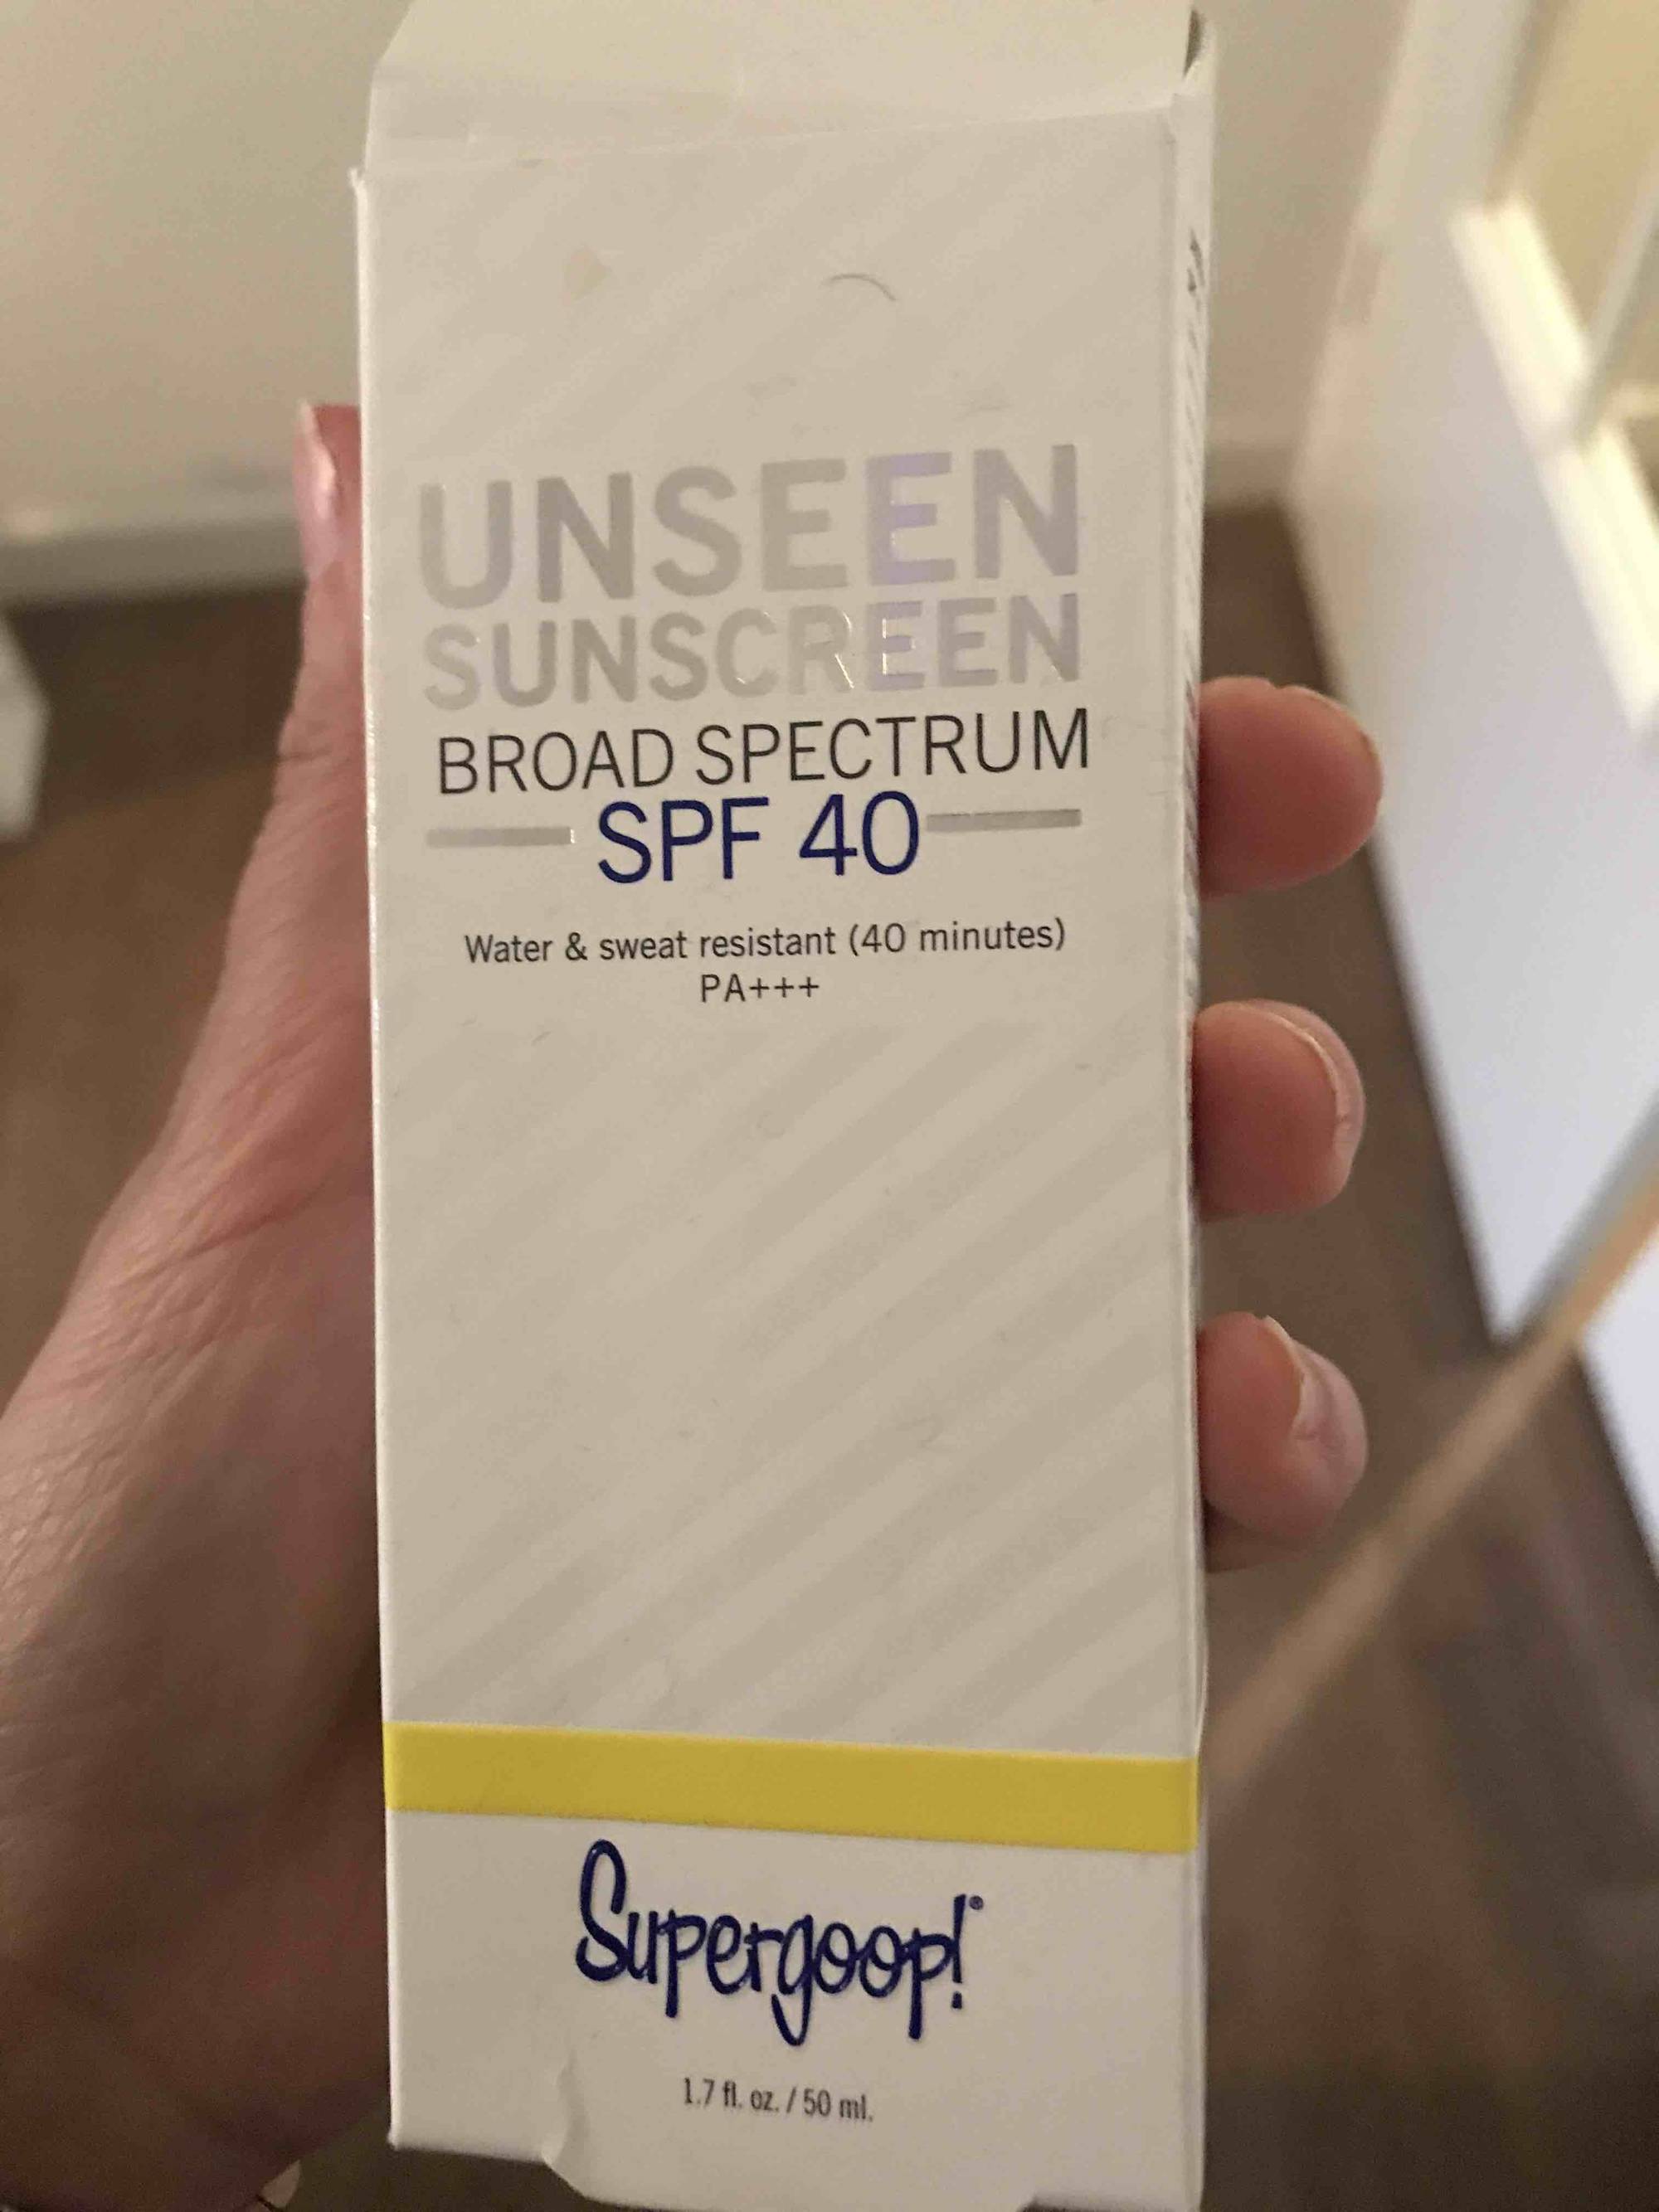 SUPERGOOP! - Unseen - Sunscreen broad spectrum SPF 40